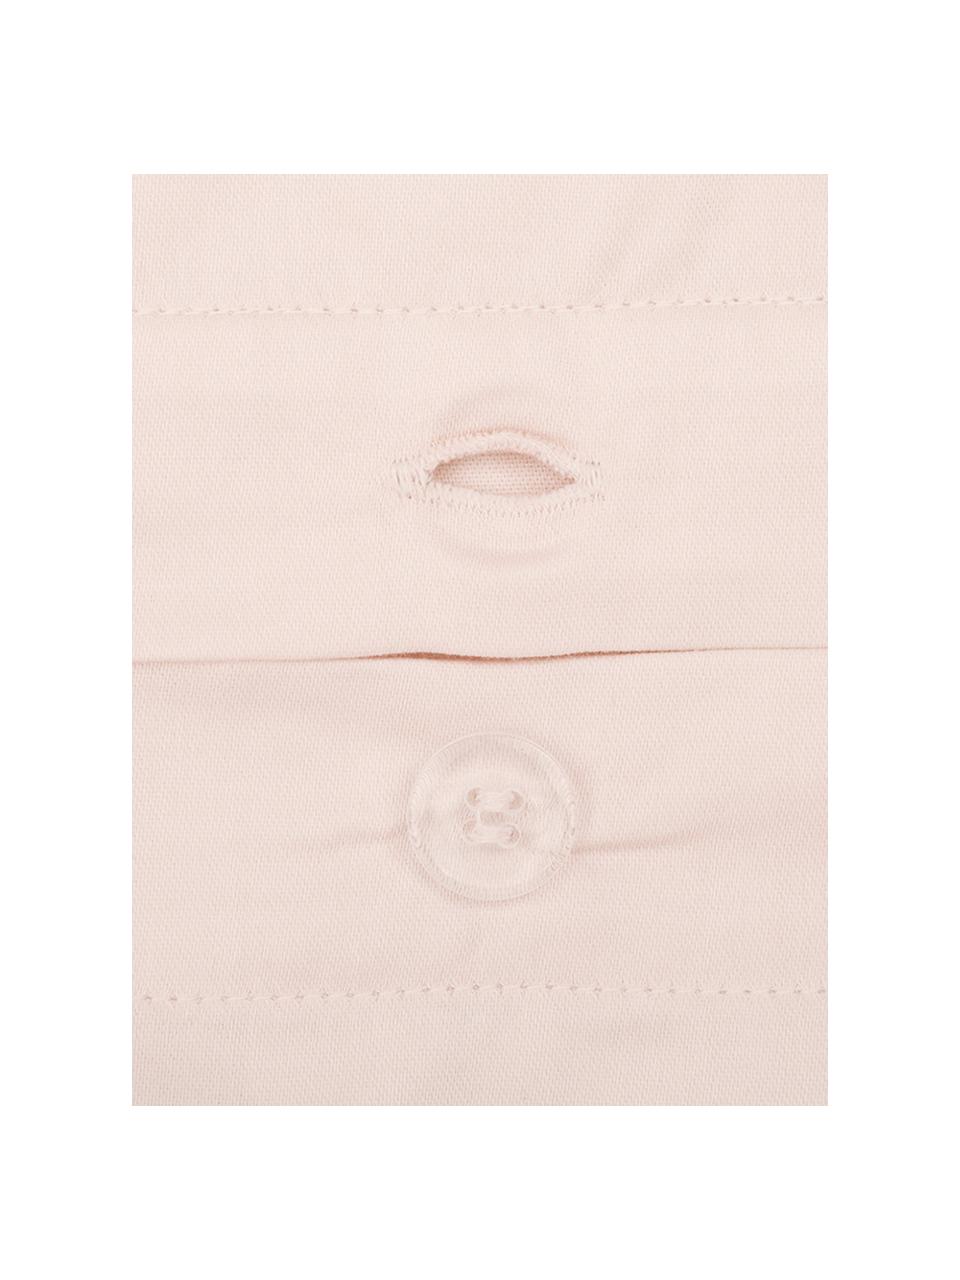 Baumwollsatin-Kissenbezug Premium in Rosa mit Stehsaum, 65 x 65 cm, Webart: Satin, leicht glänzend Fa, Rosa, B 65 x L 65 cm